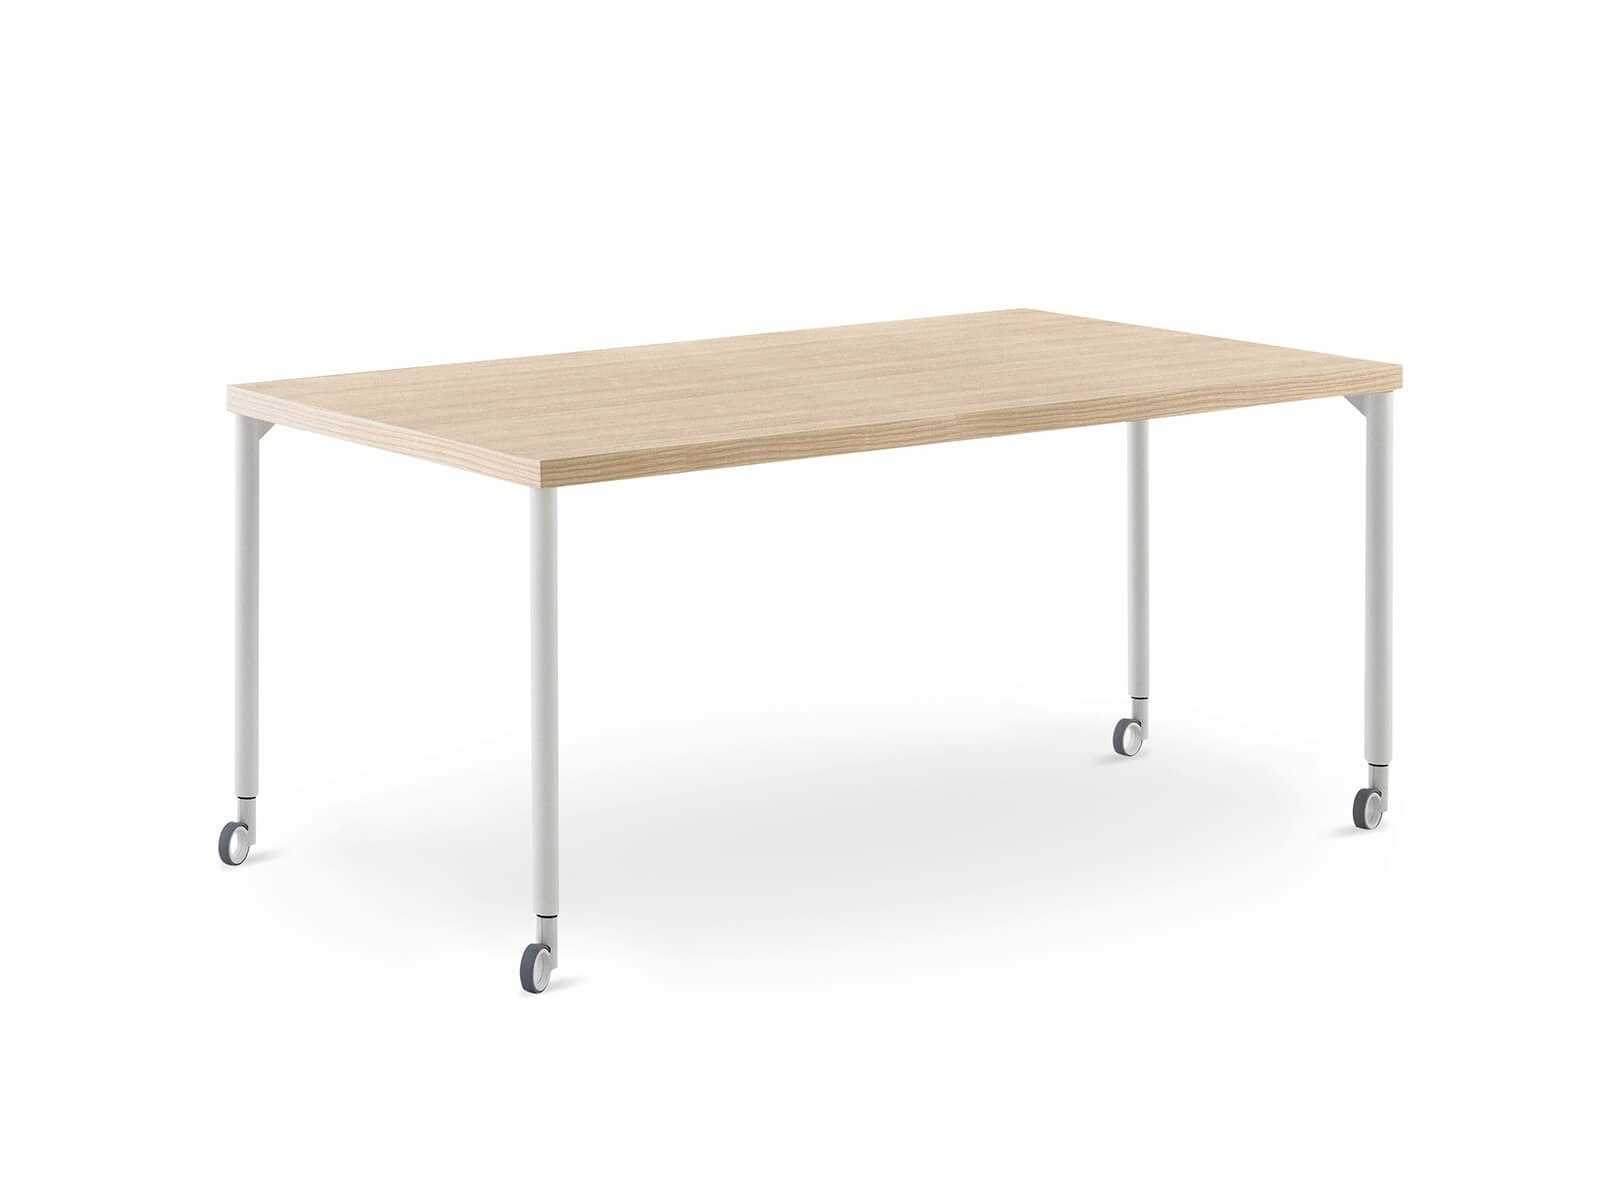 Desk with Move legs